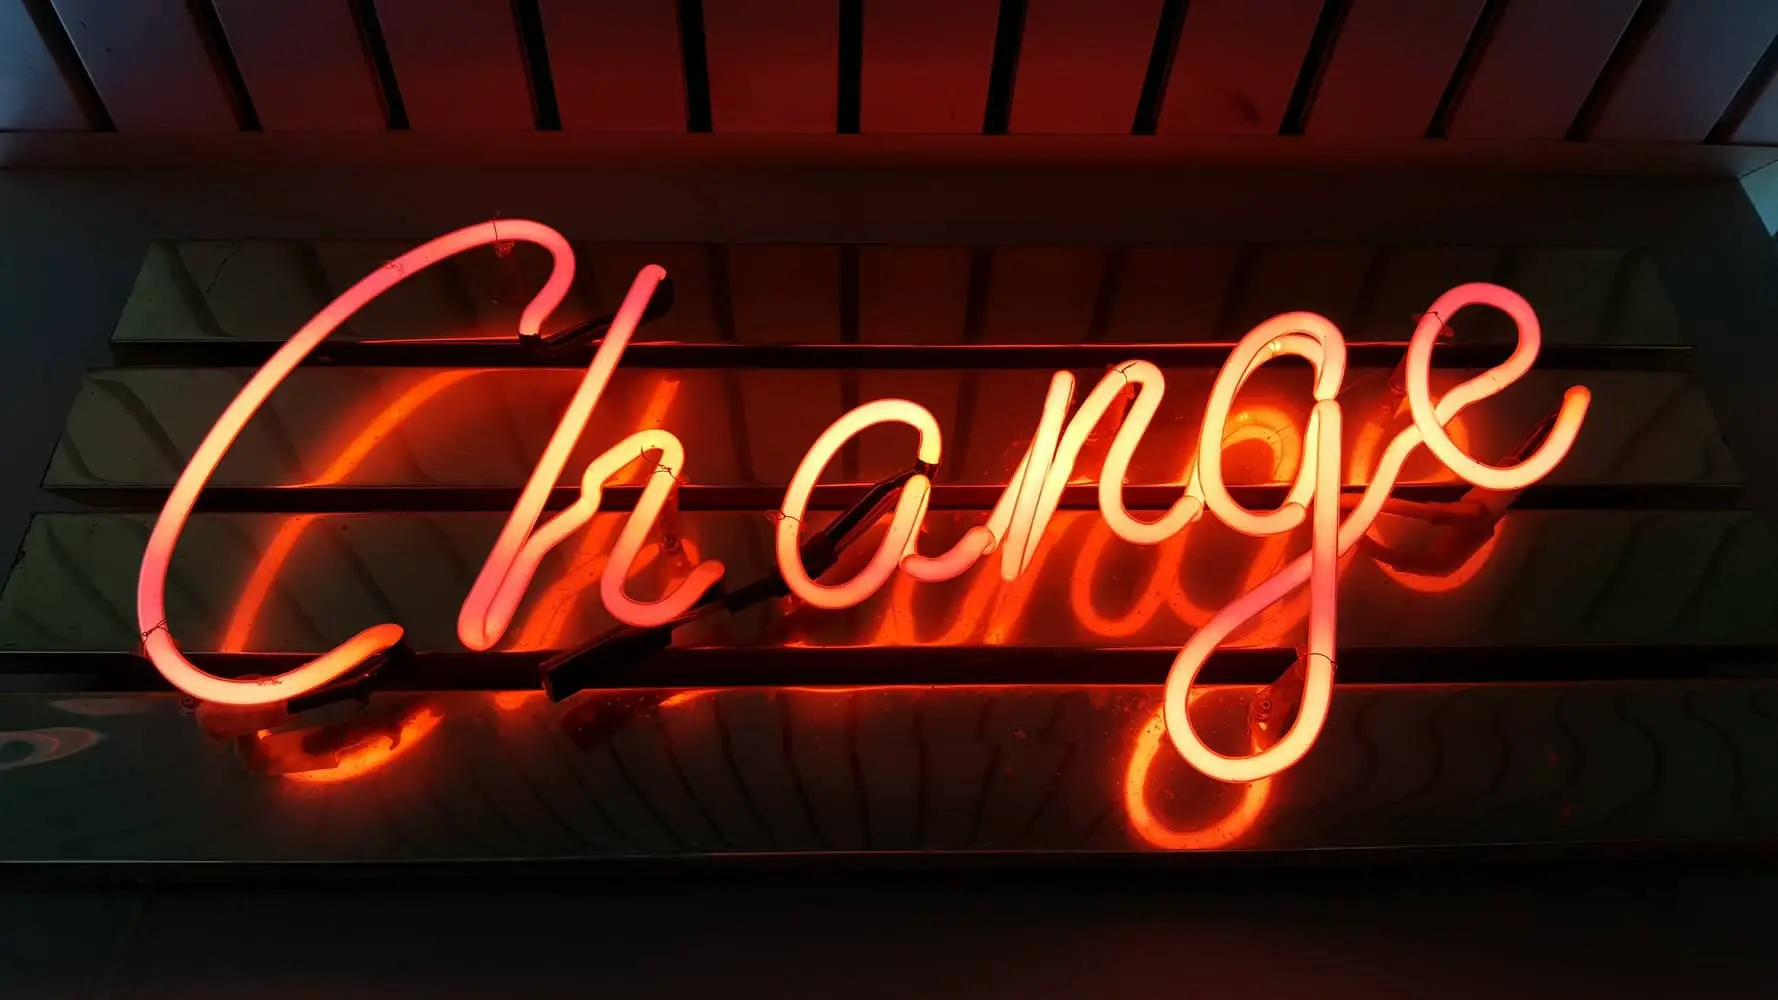 neon sign reading 'Change'